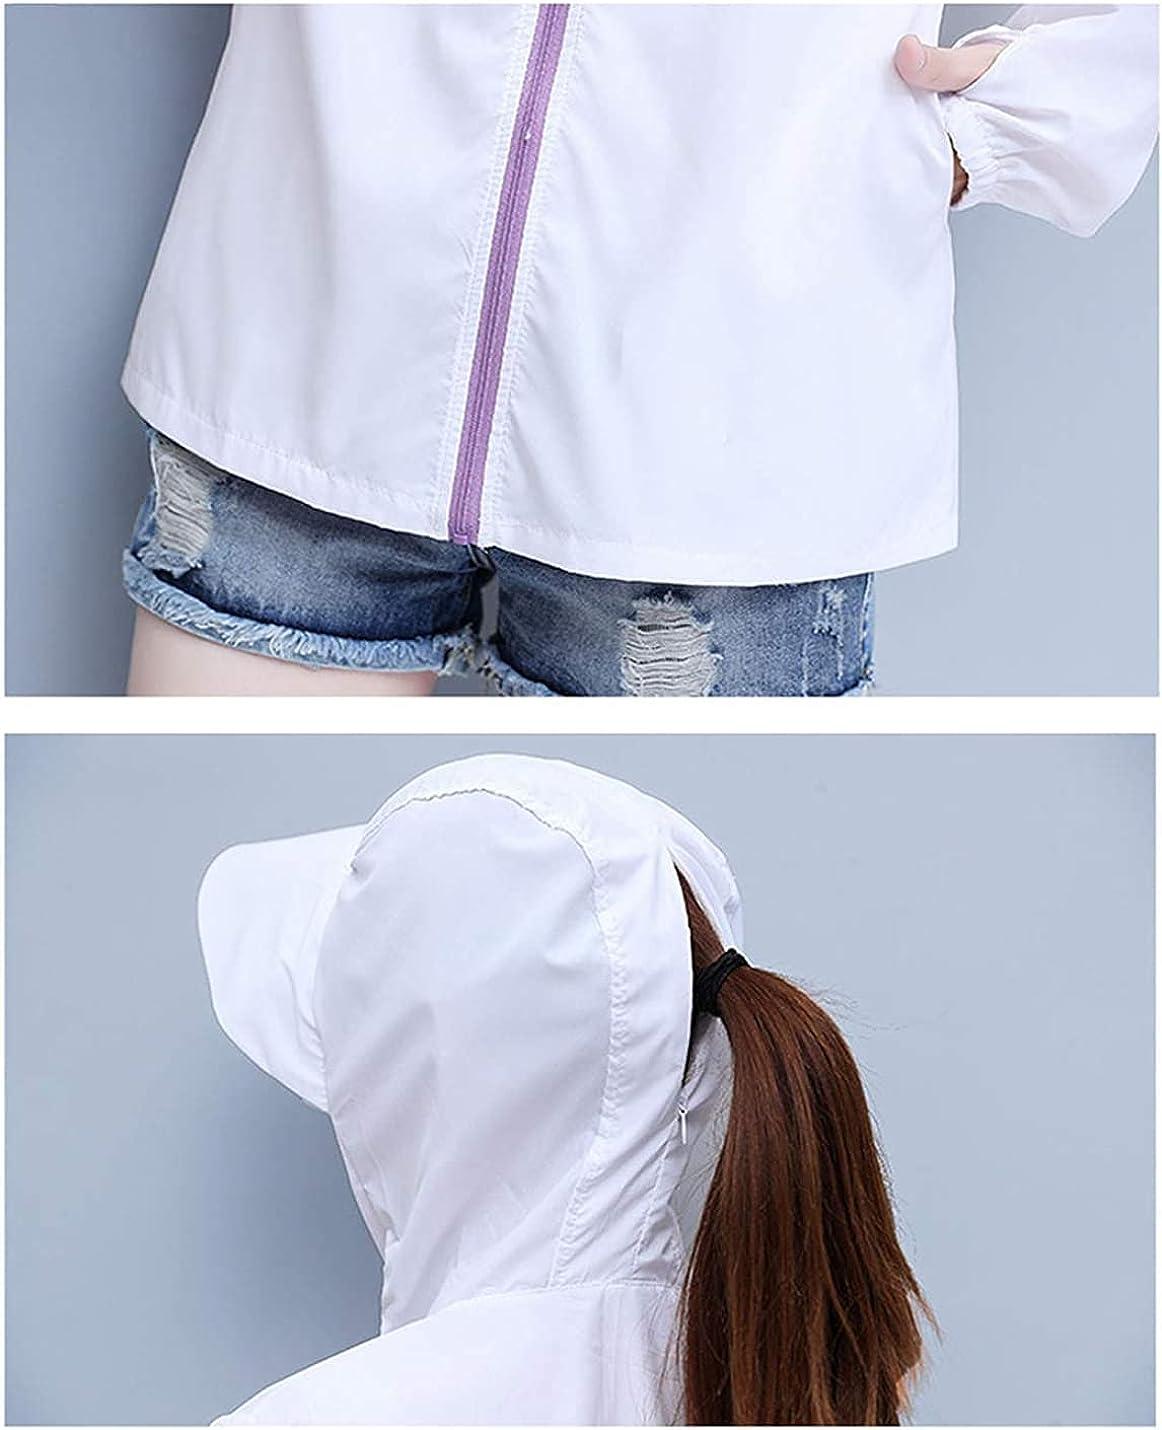  Zip-up Sun Protective Shirt Long Sleeve Rashguard